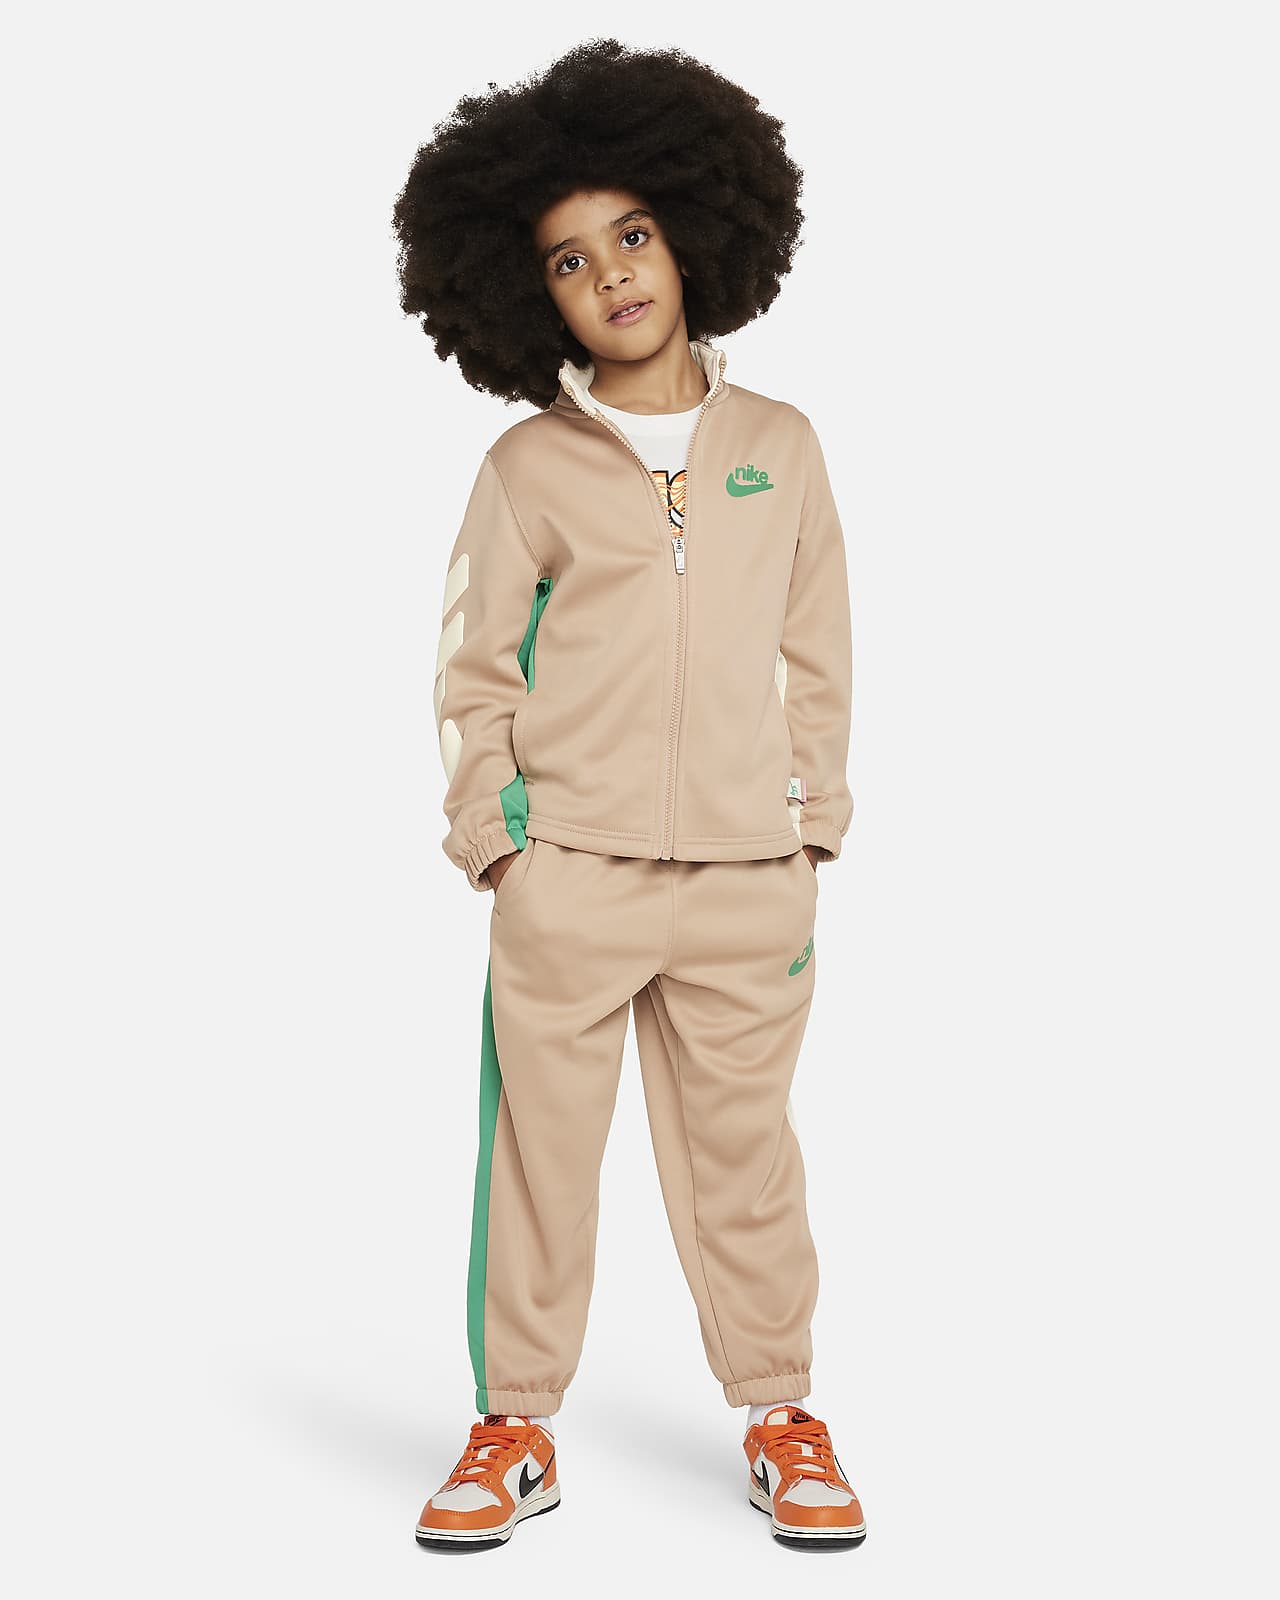 Nike Dri-FIT Colorblocked Little Kids' 2-Piece Full-Zip Set